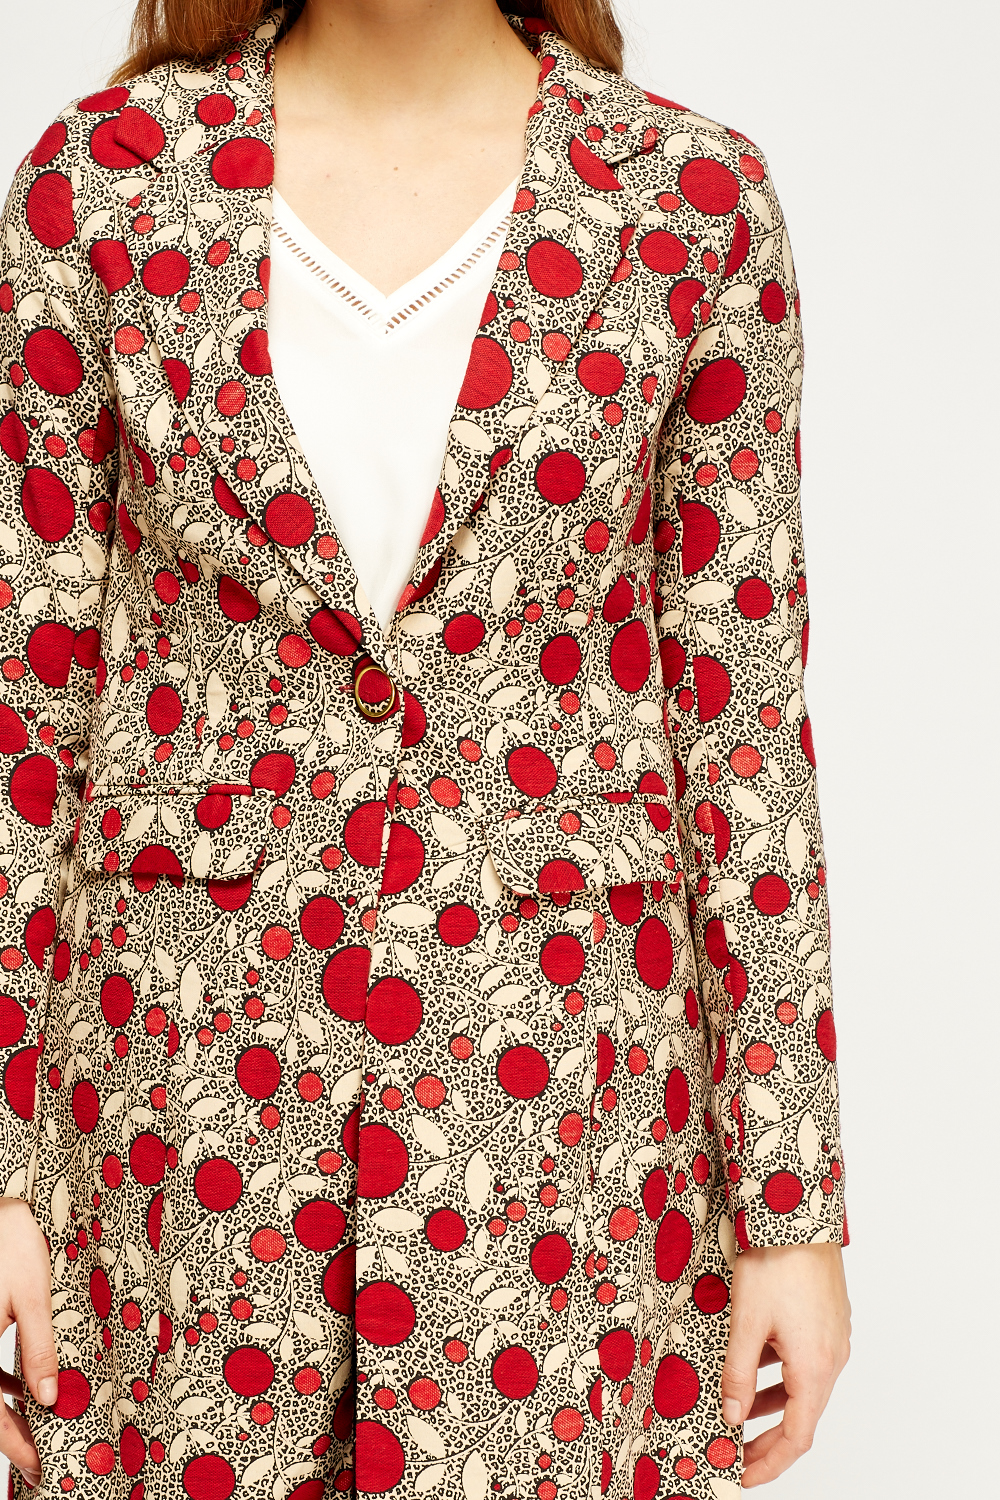 Printed Long Line Floral Jacket - Just $7